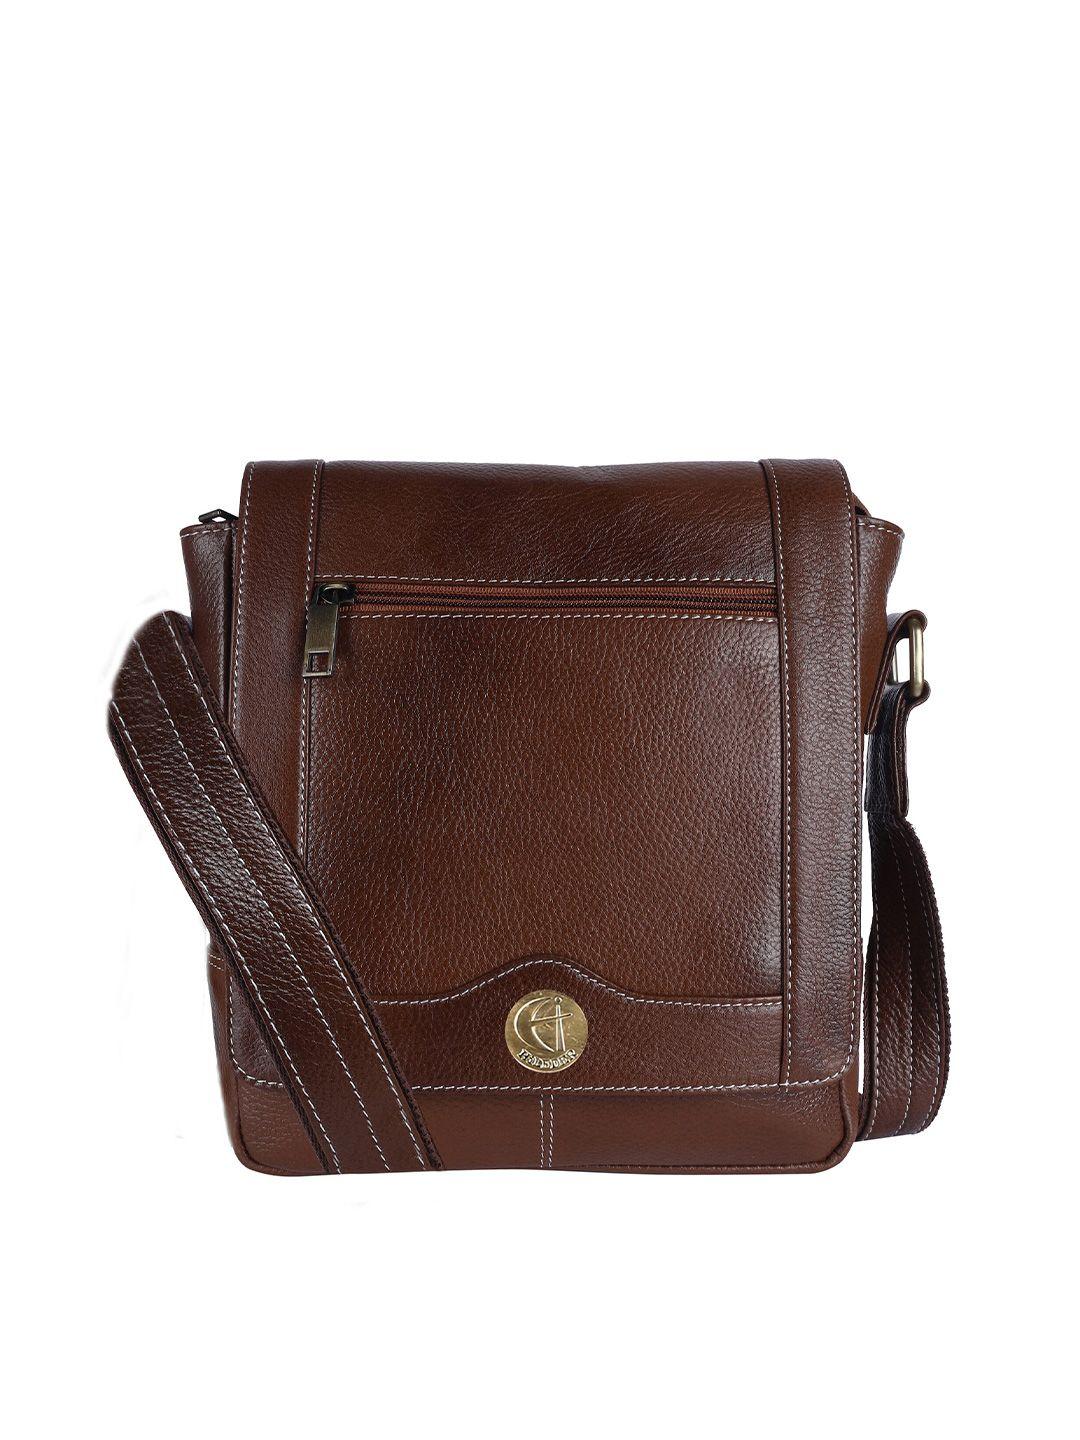 hileder unisex coffee brown textured messenger bag